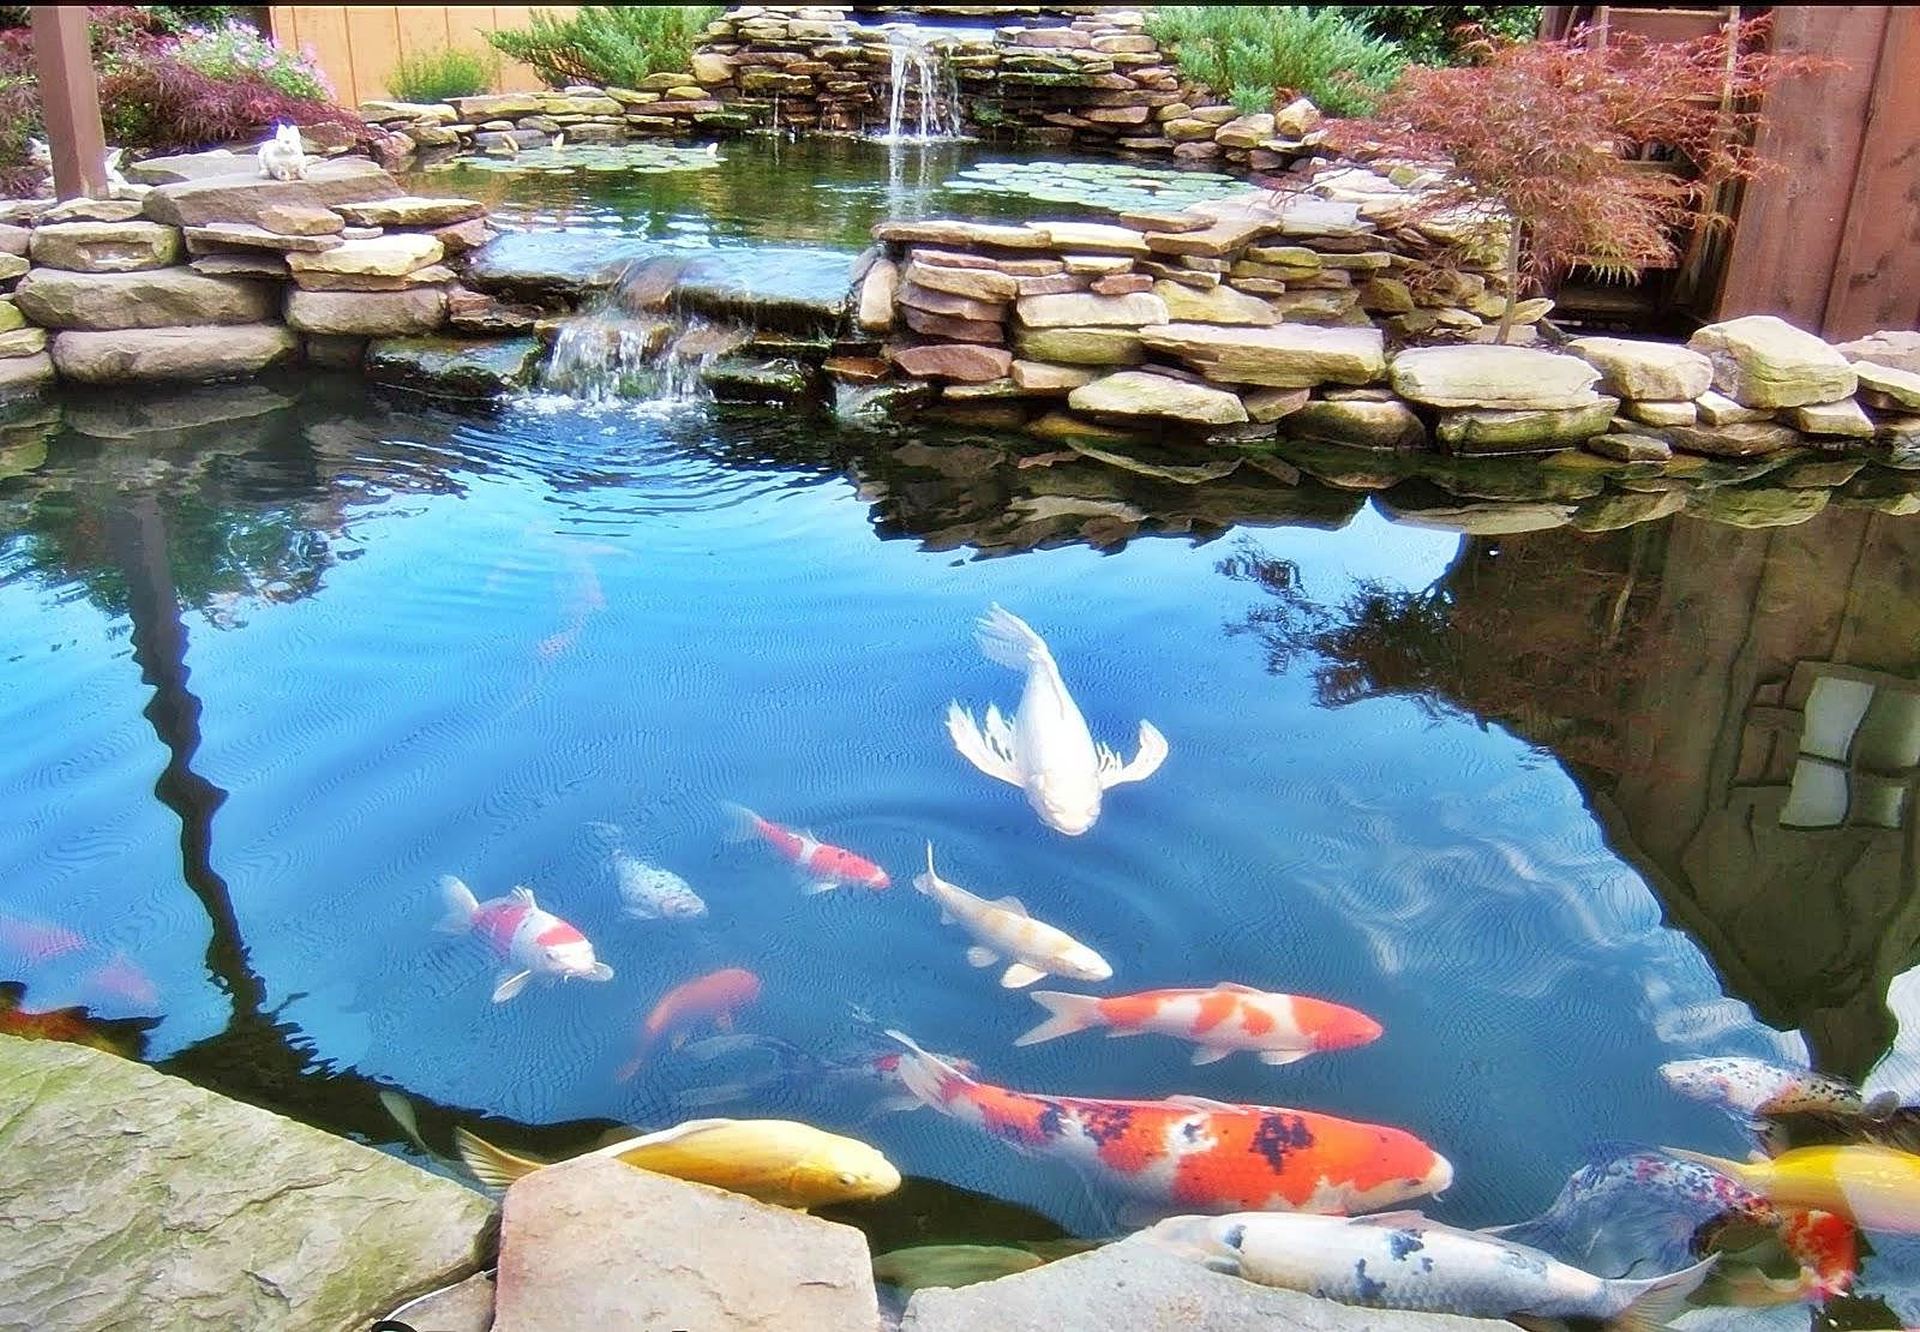 aquarium wallpaper hidup,body of water,fish pond,pond,koi,watercourse